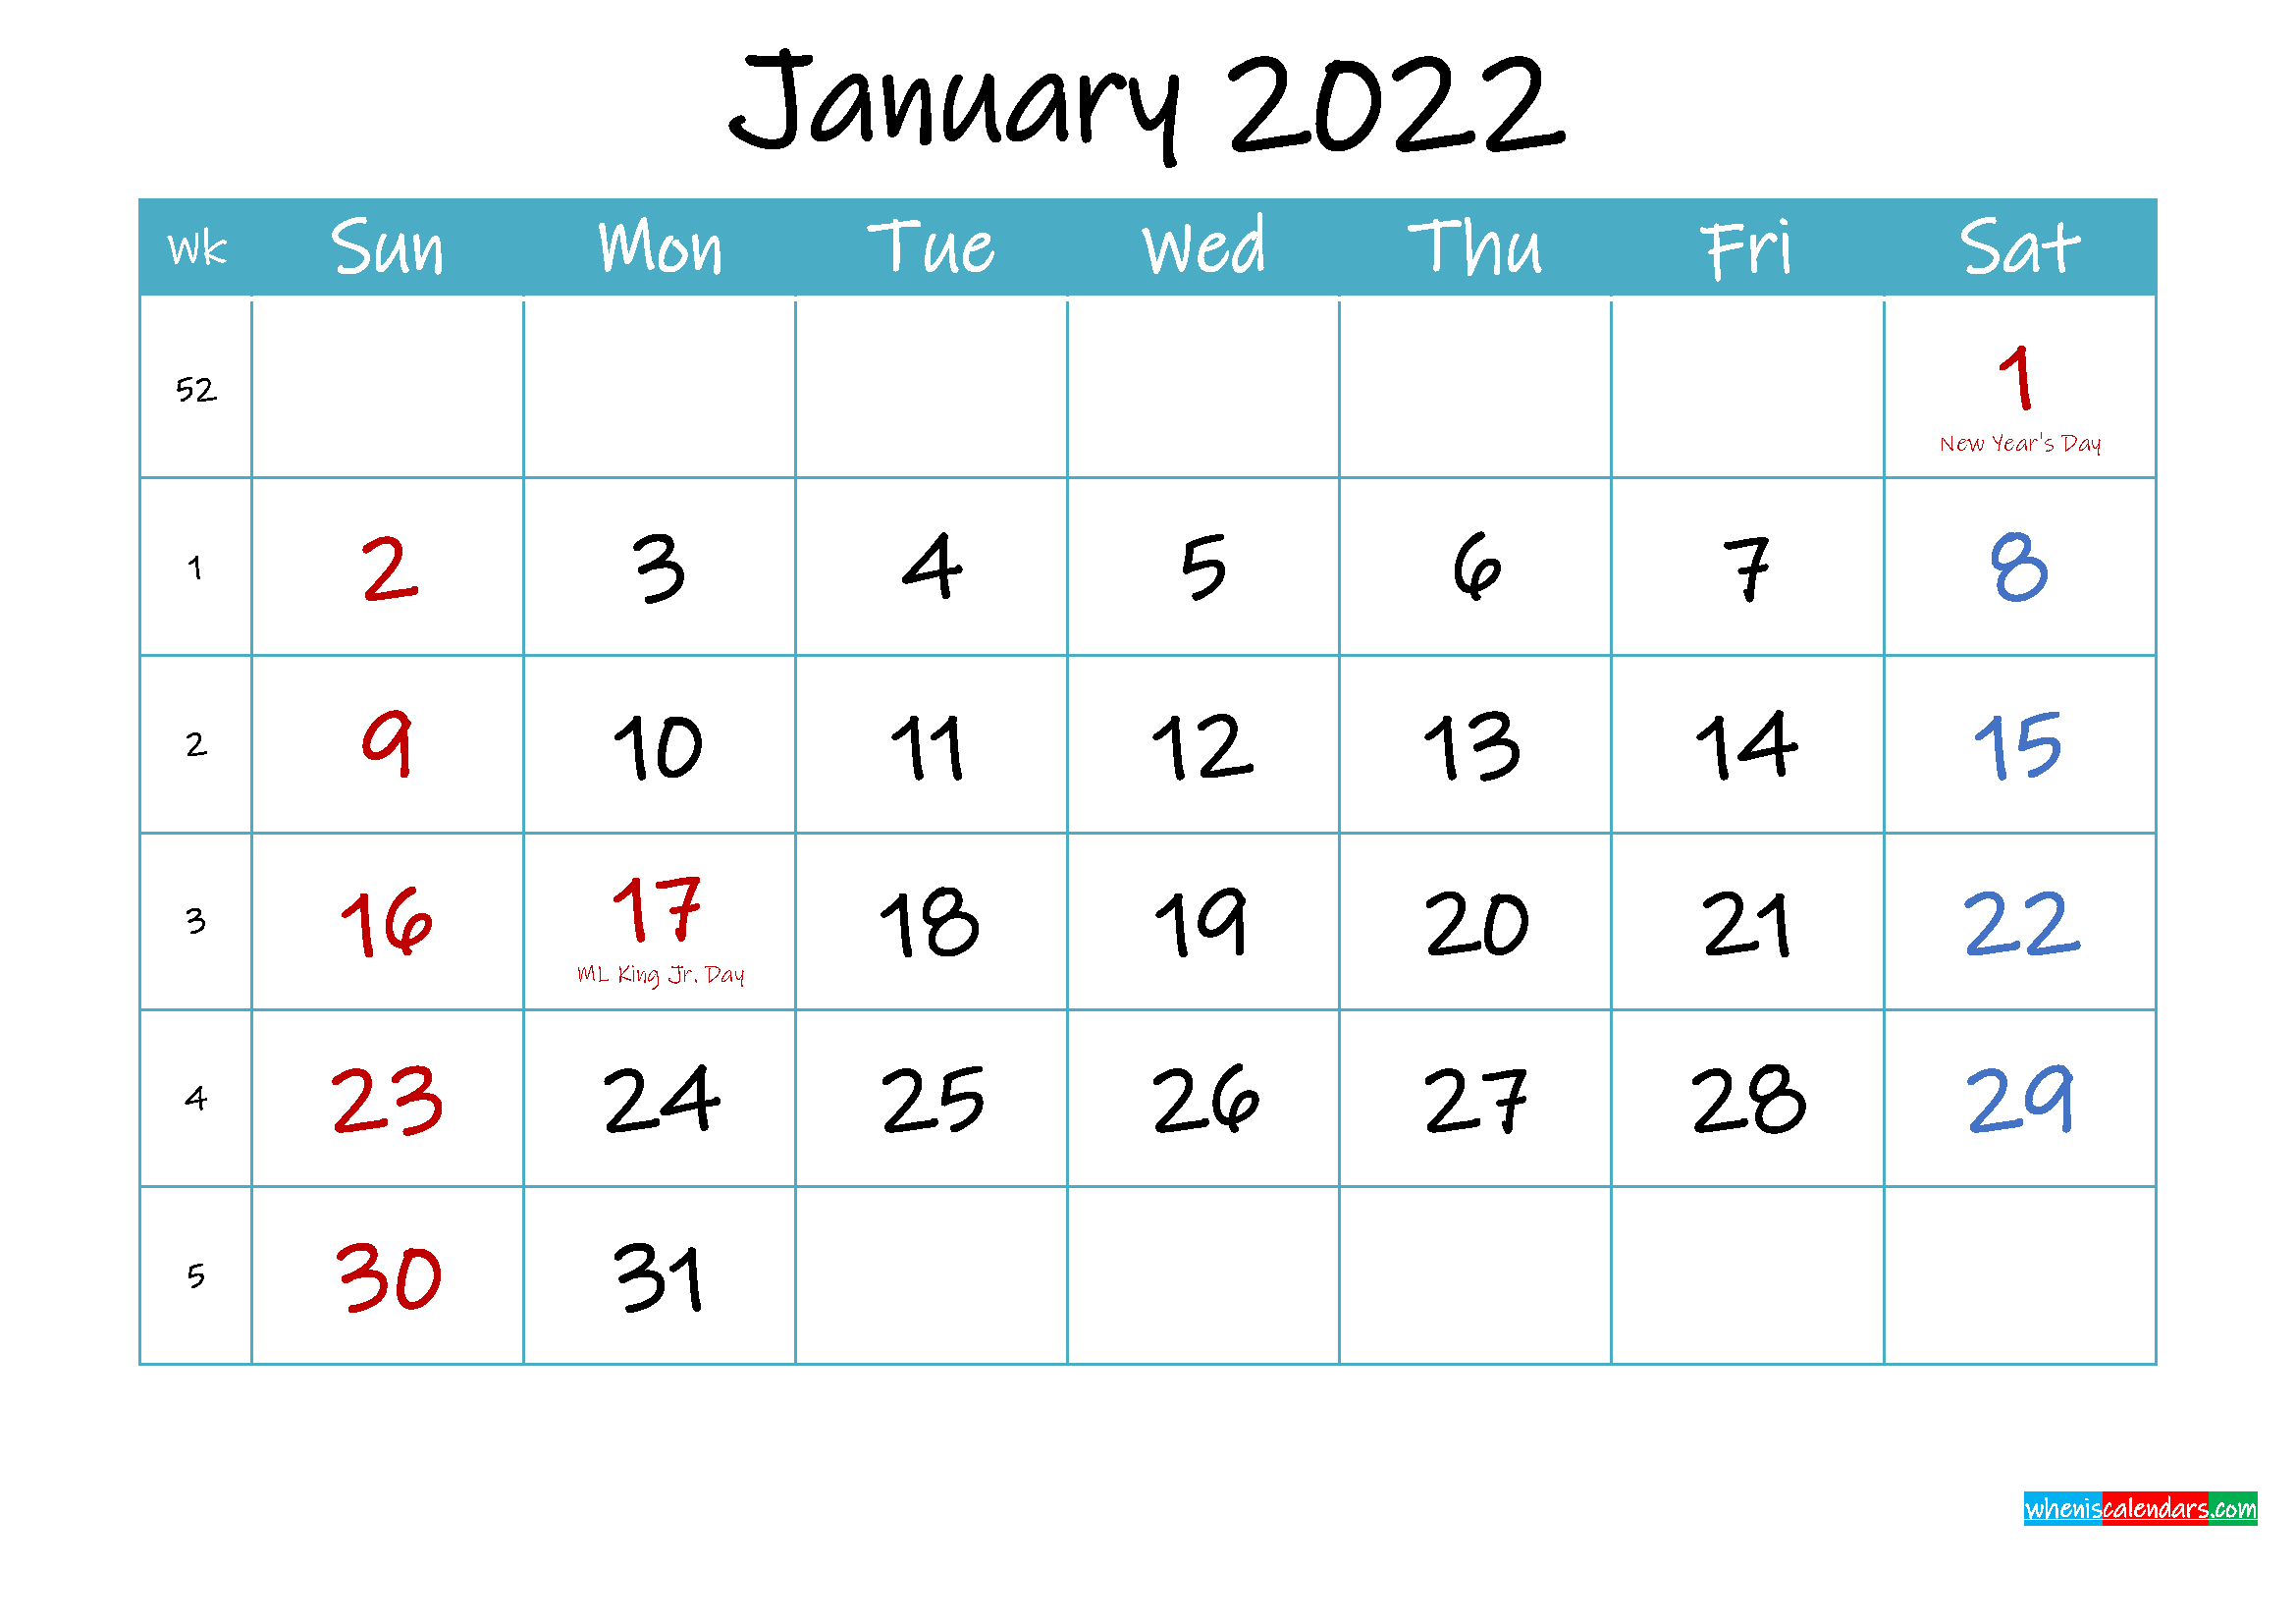 Take January 2022 Calendar With Us Holidays